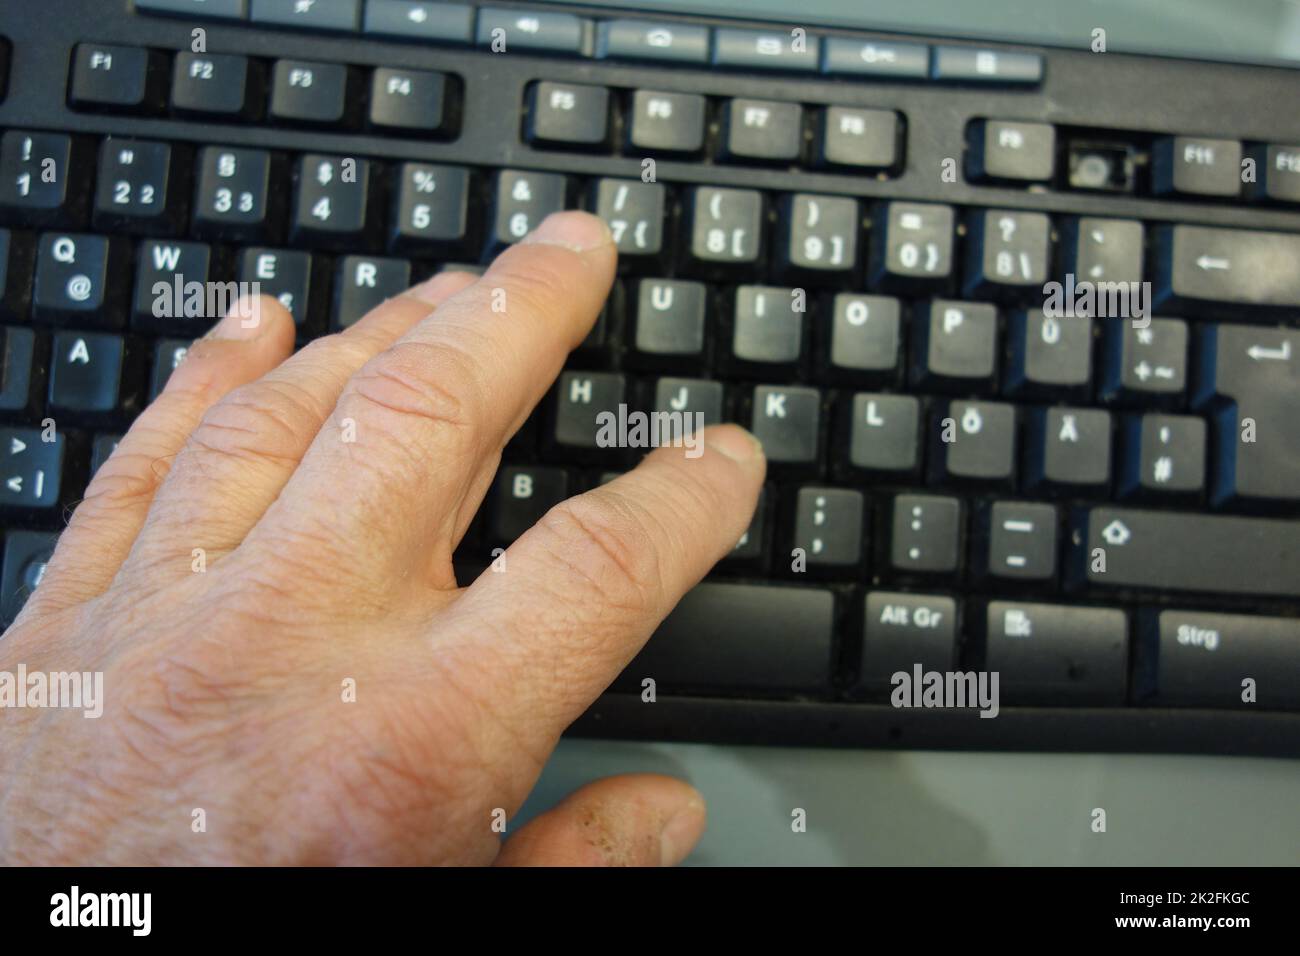 computer keyboard for electronic communication Stock Photo - Alamy